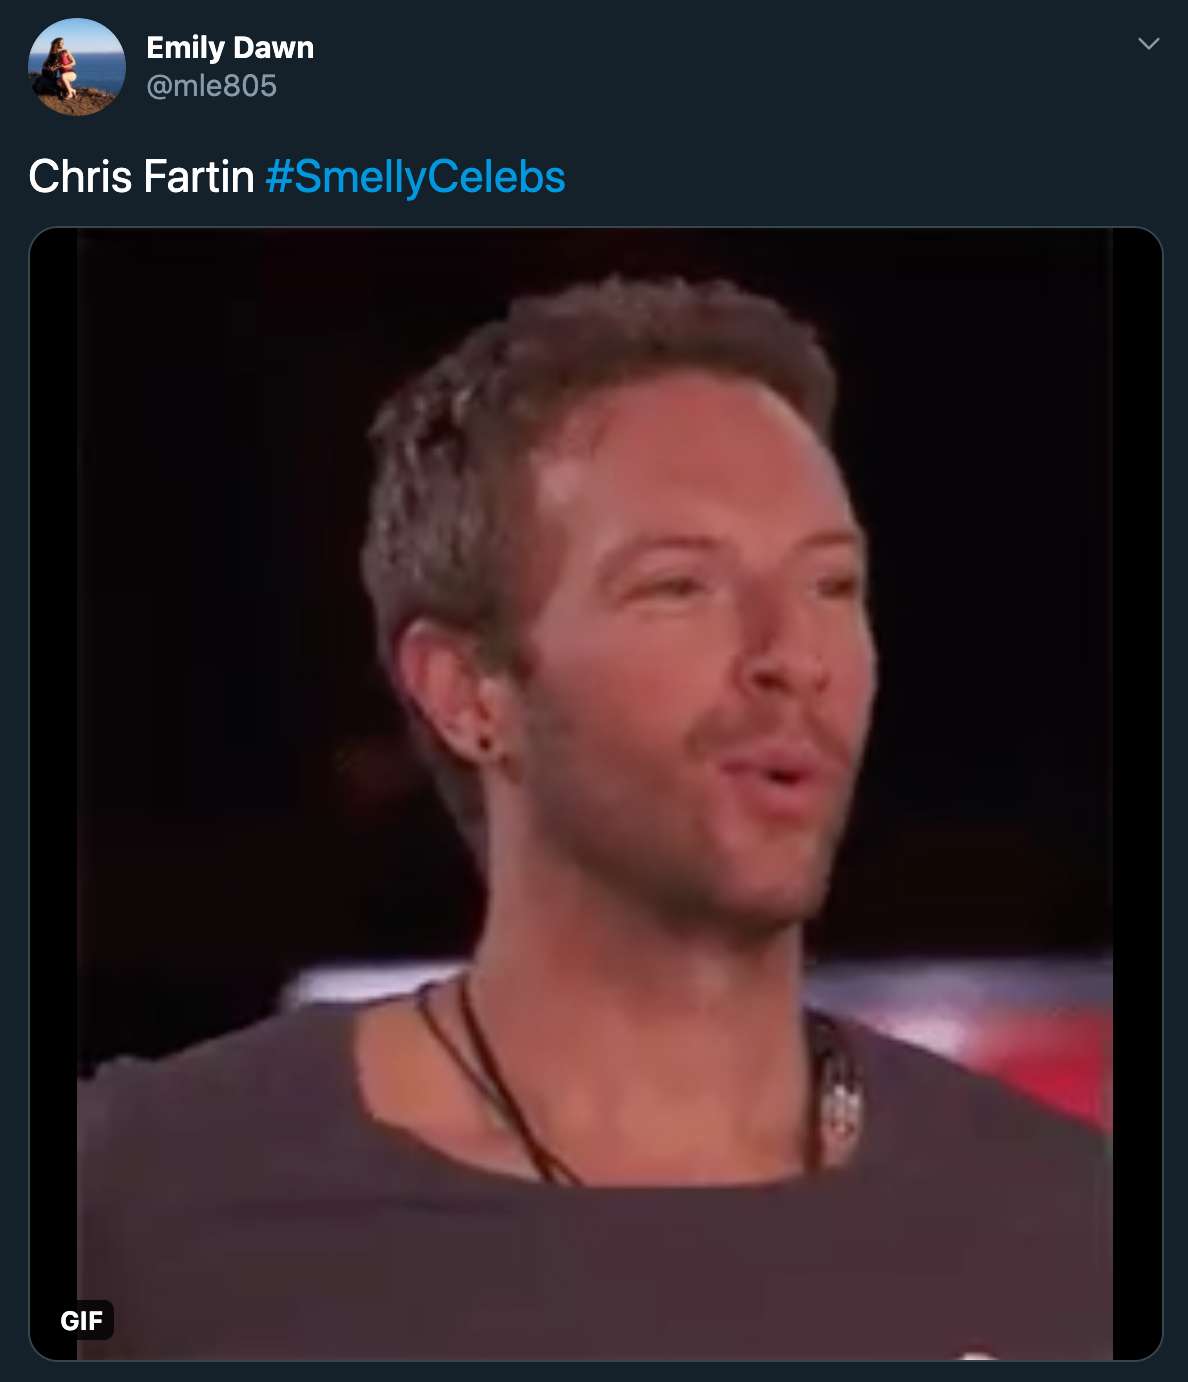 Chris Fartin - chris martin